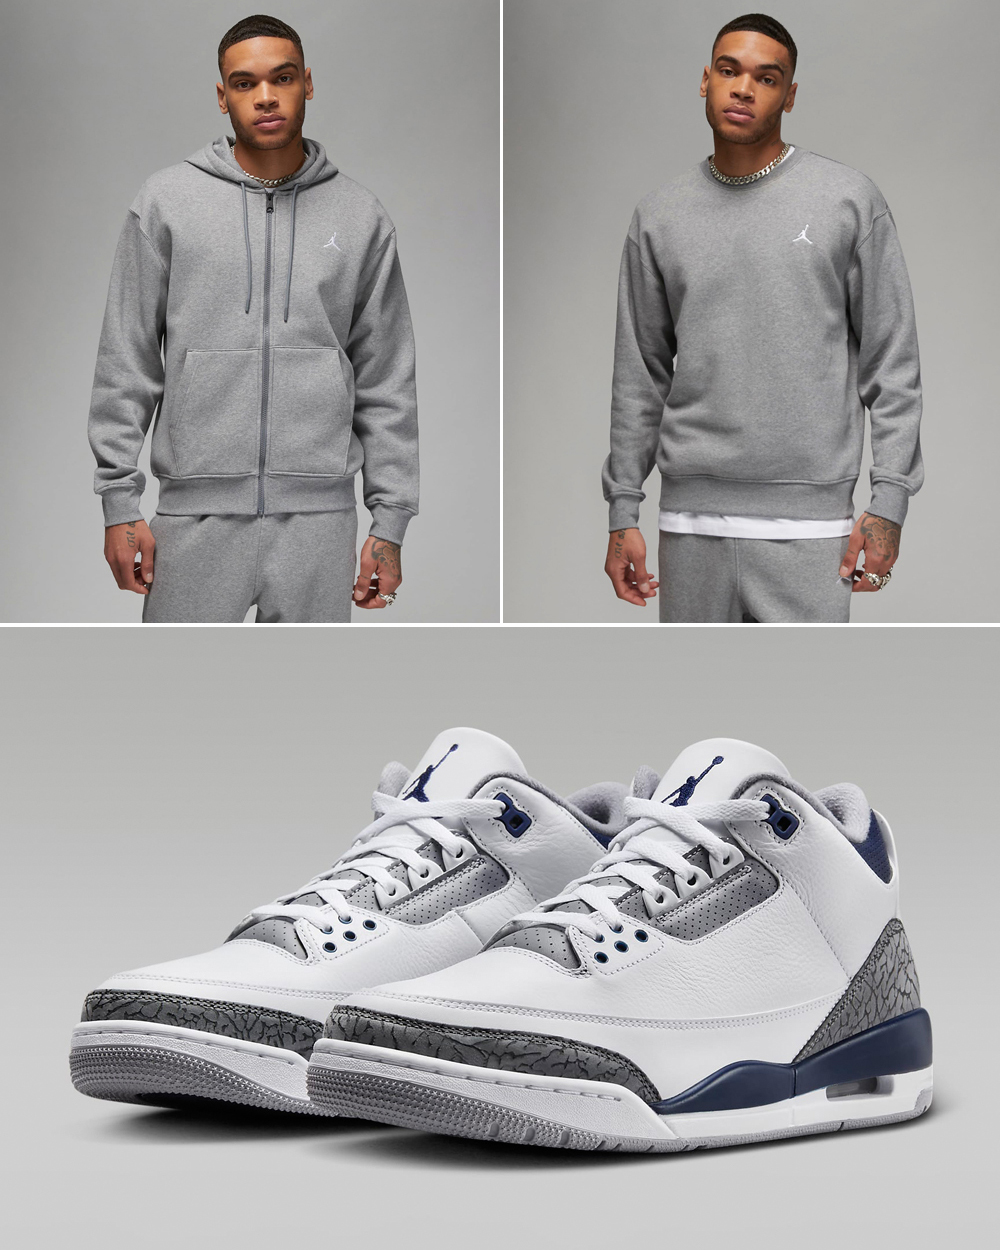 Air-Jordan-3-Midnight-Navy-Cement-Grey-Clothing